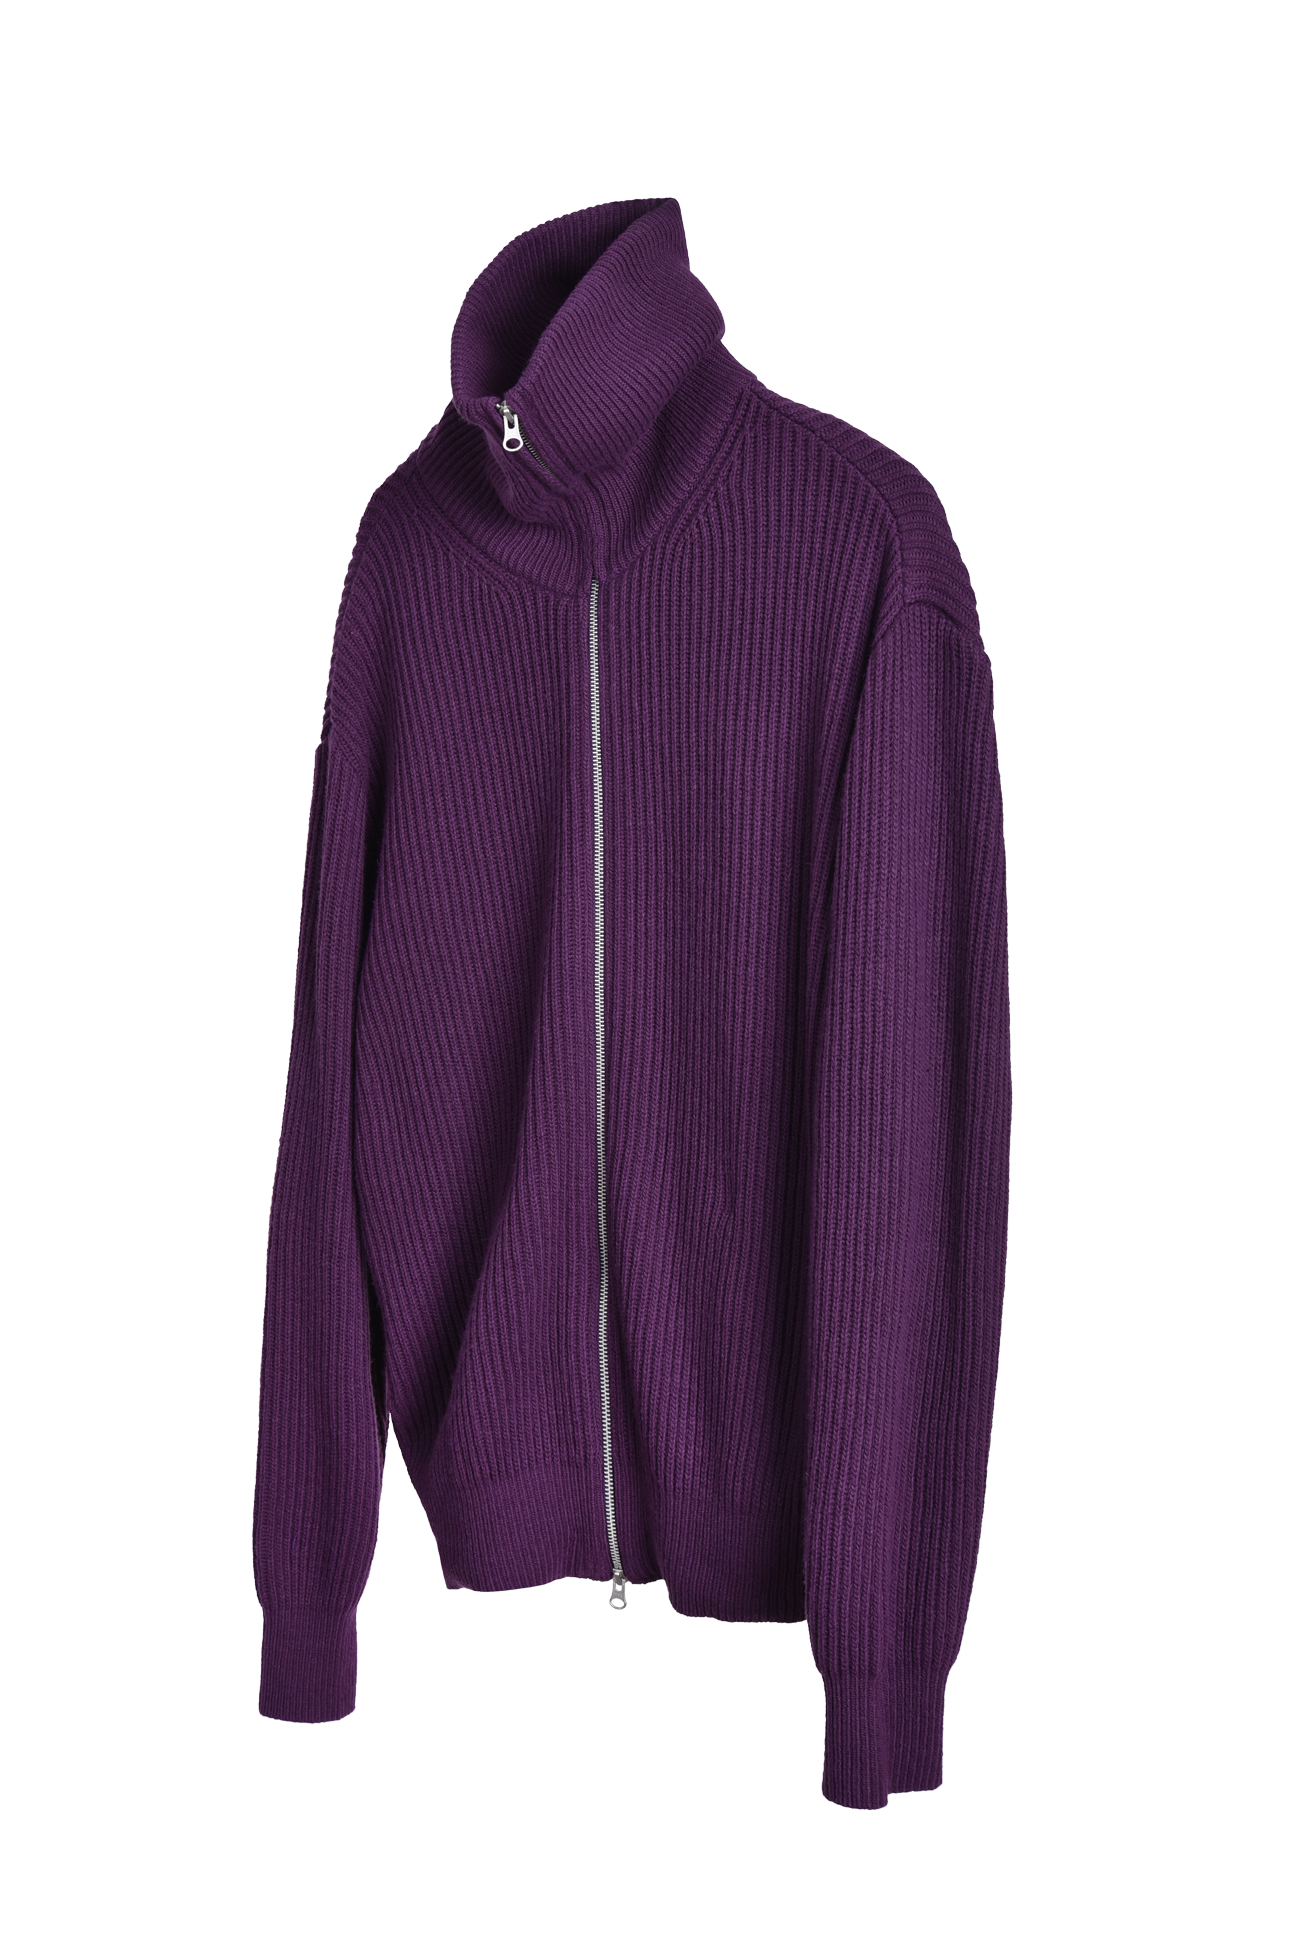 Highneck Cashmere Knit Zip Up [Purple]